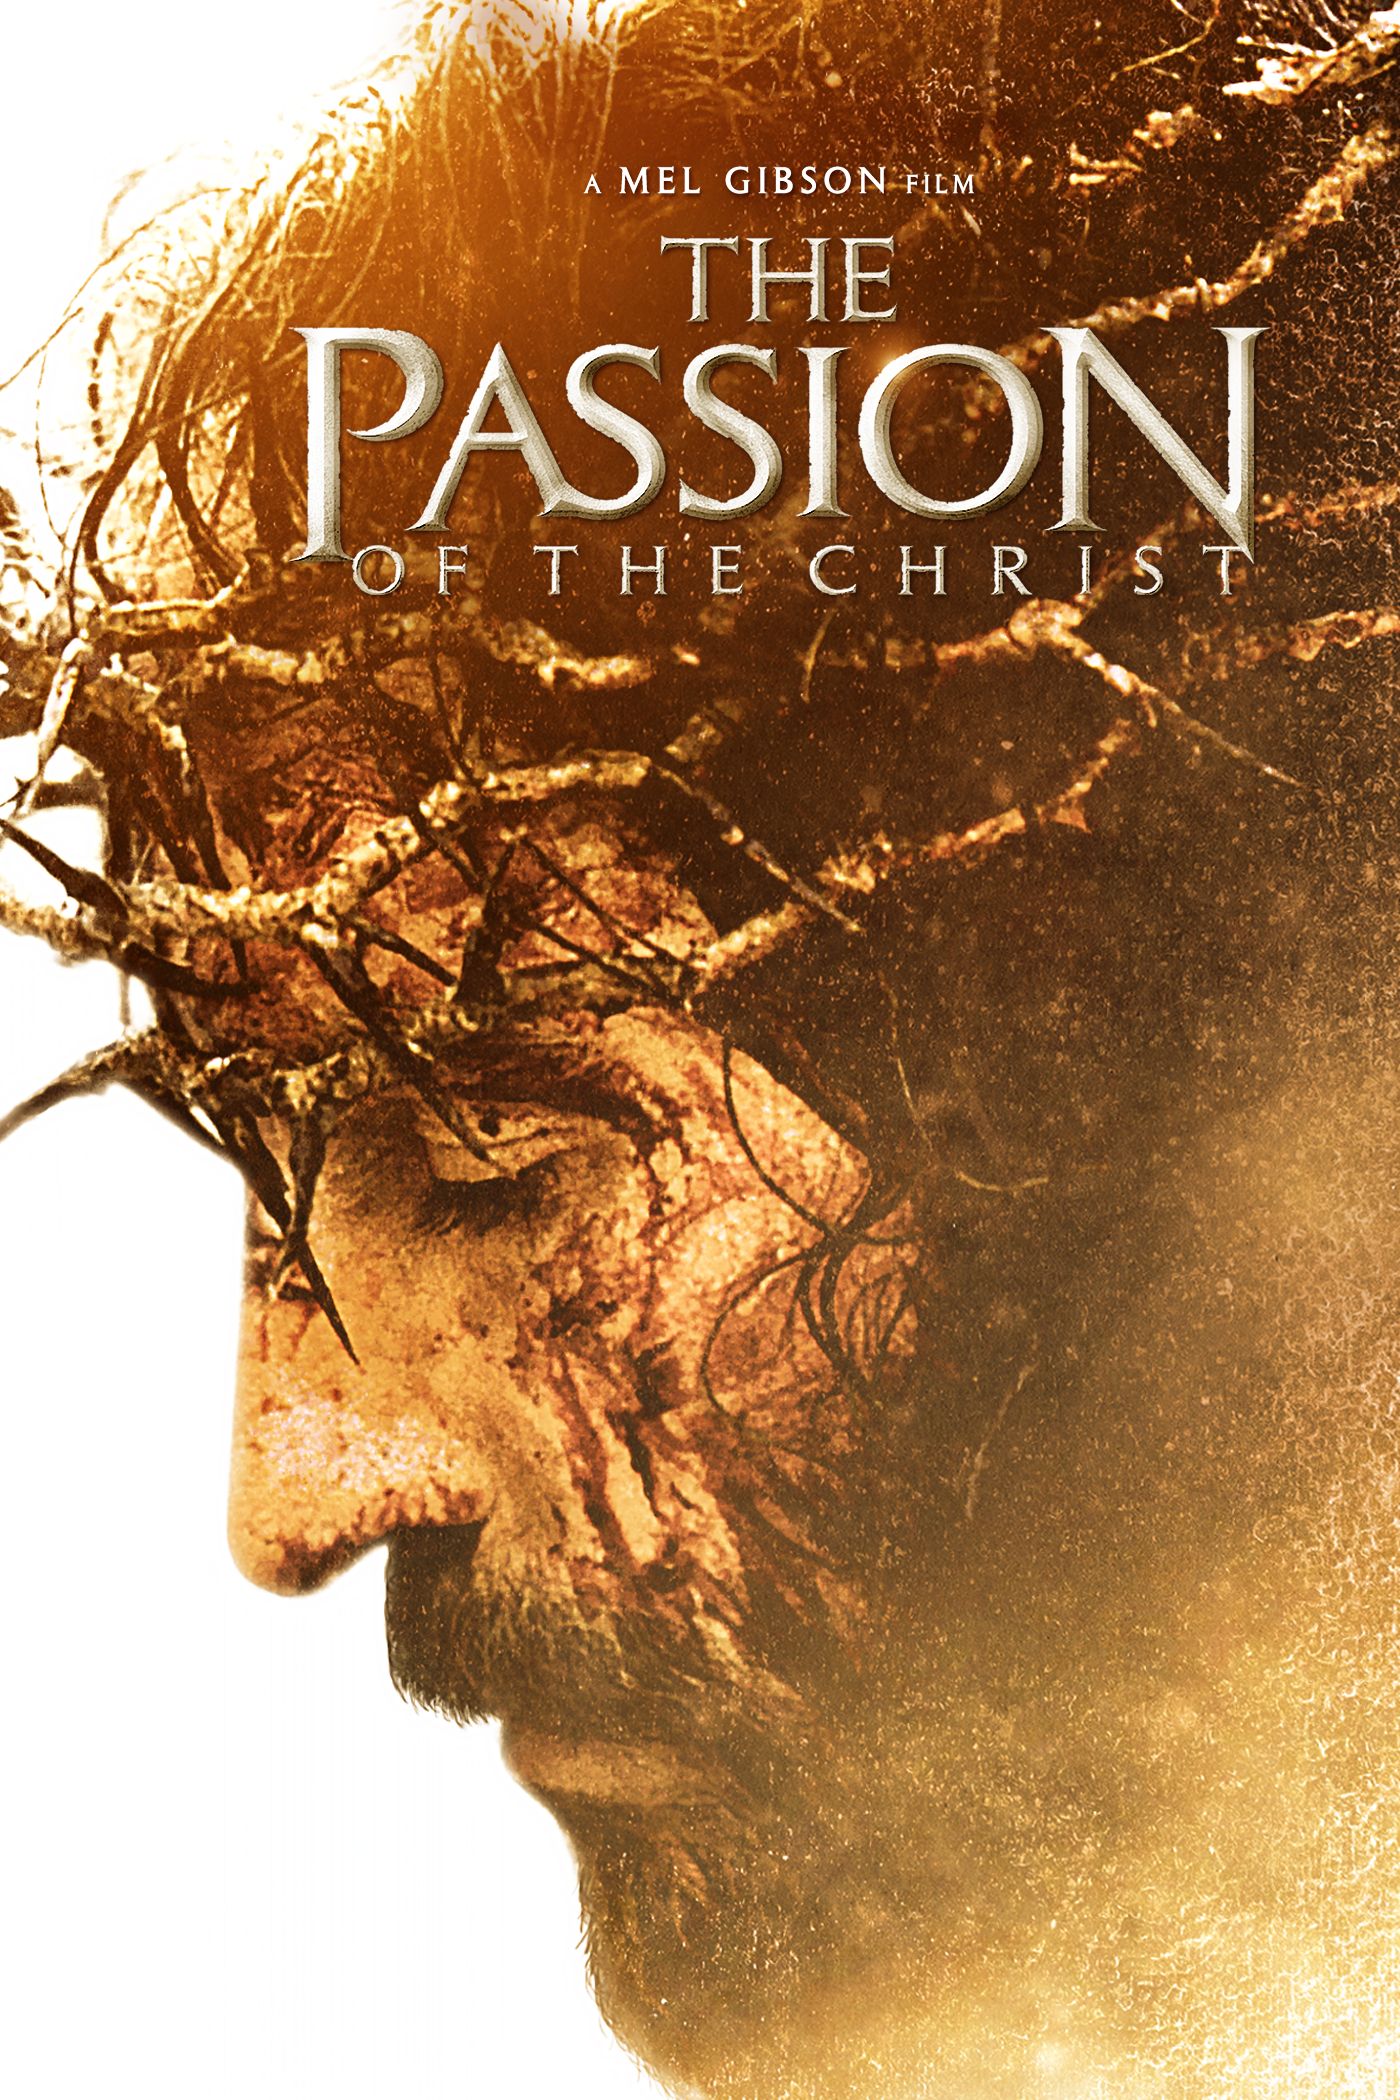 the passion of christ full movie megashare